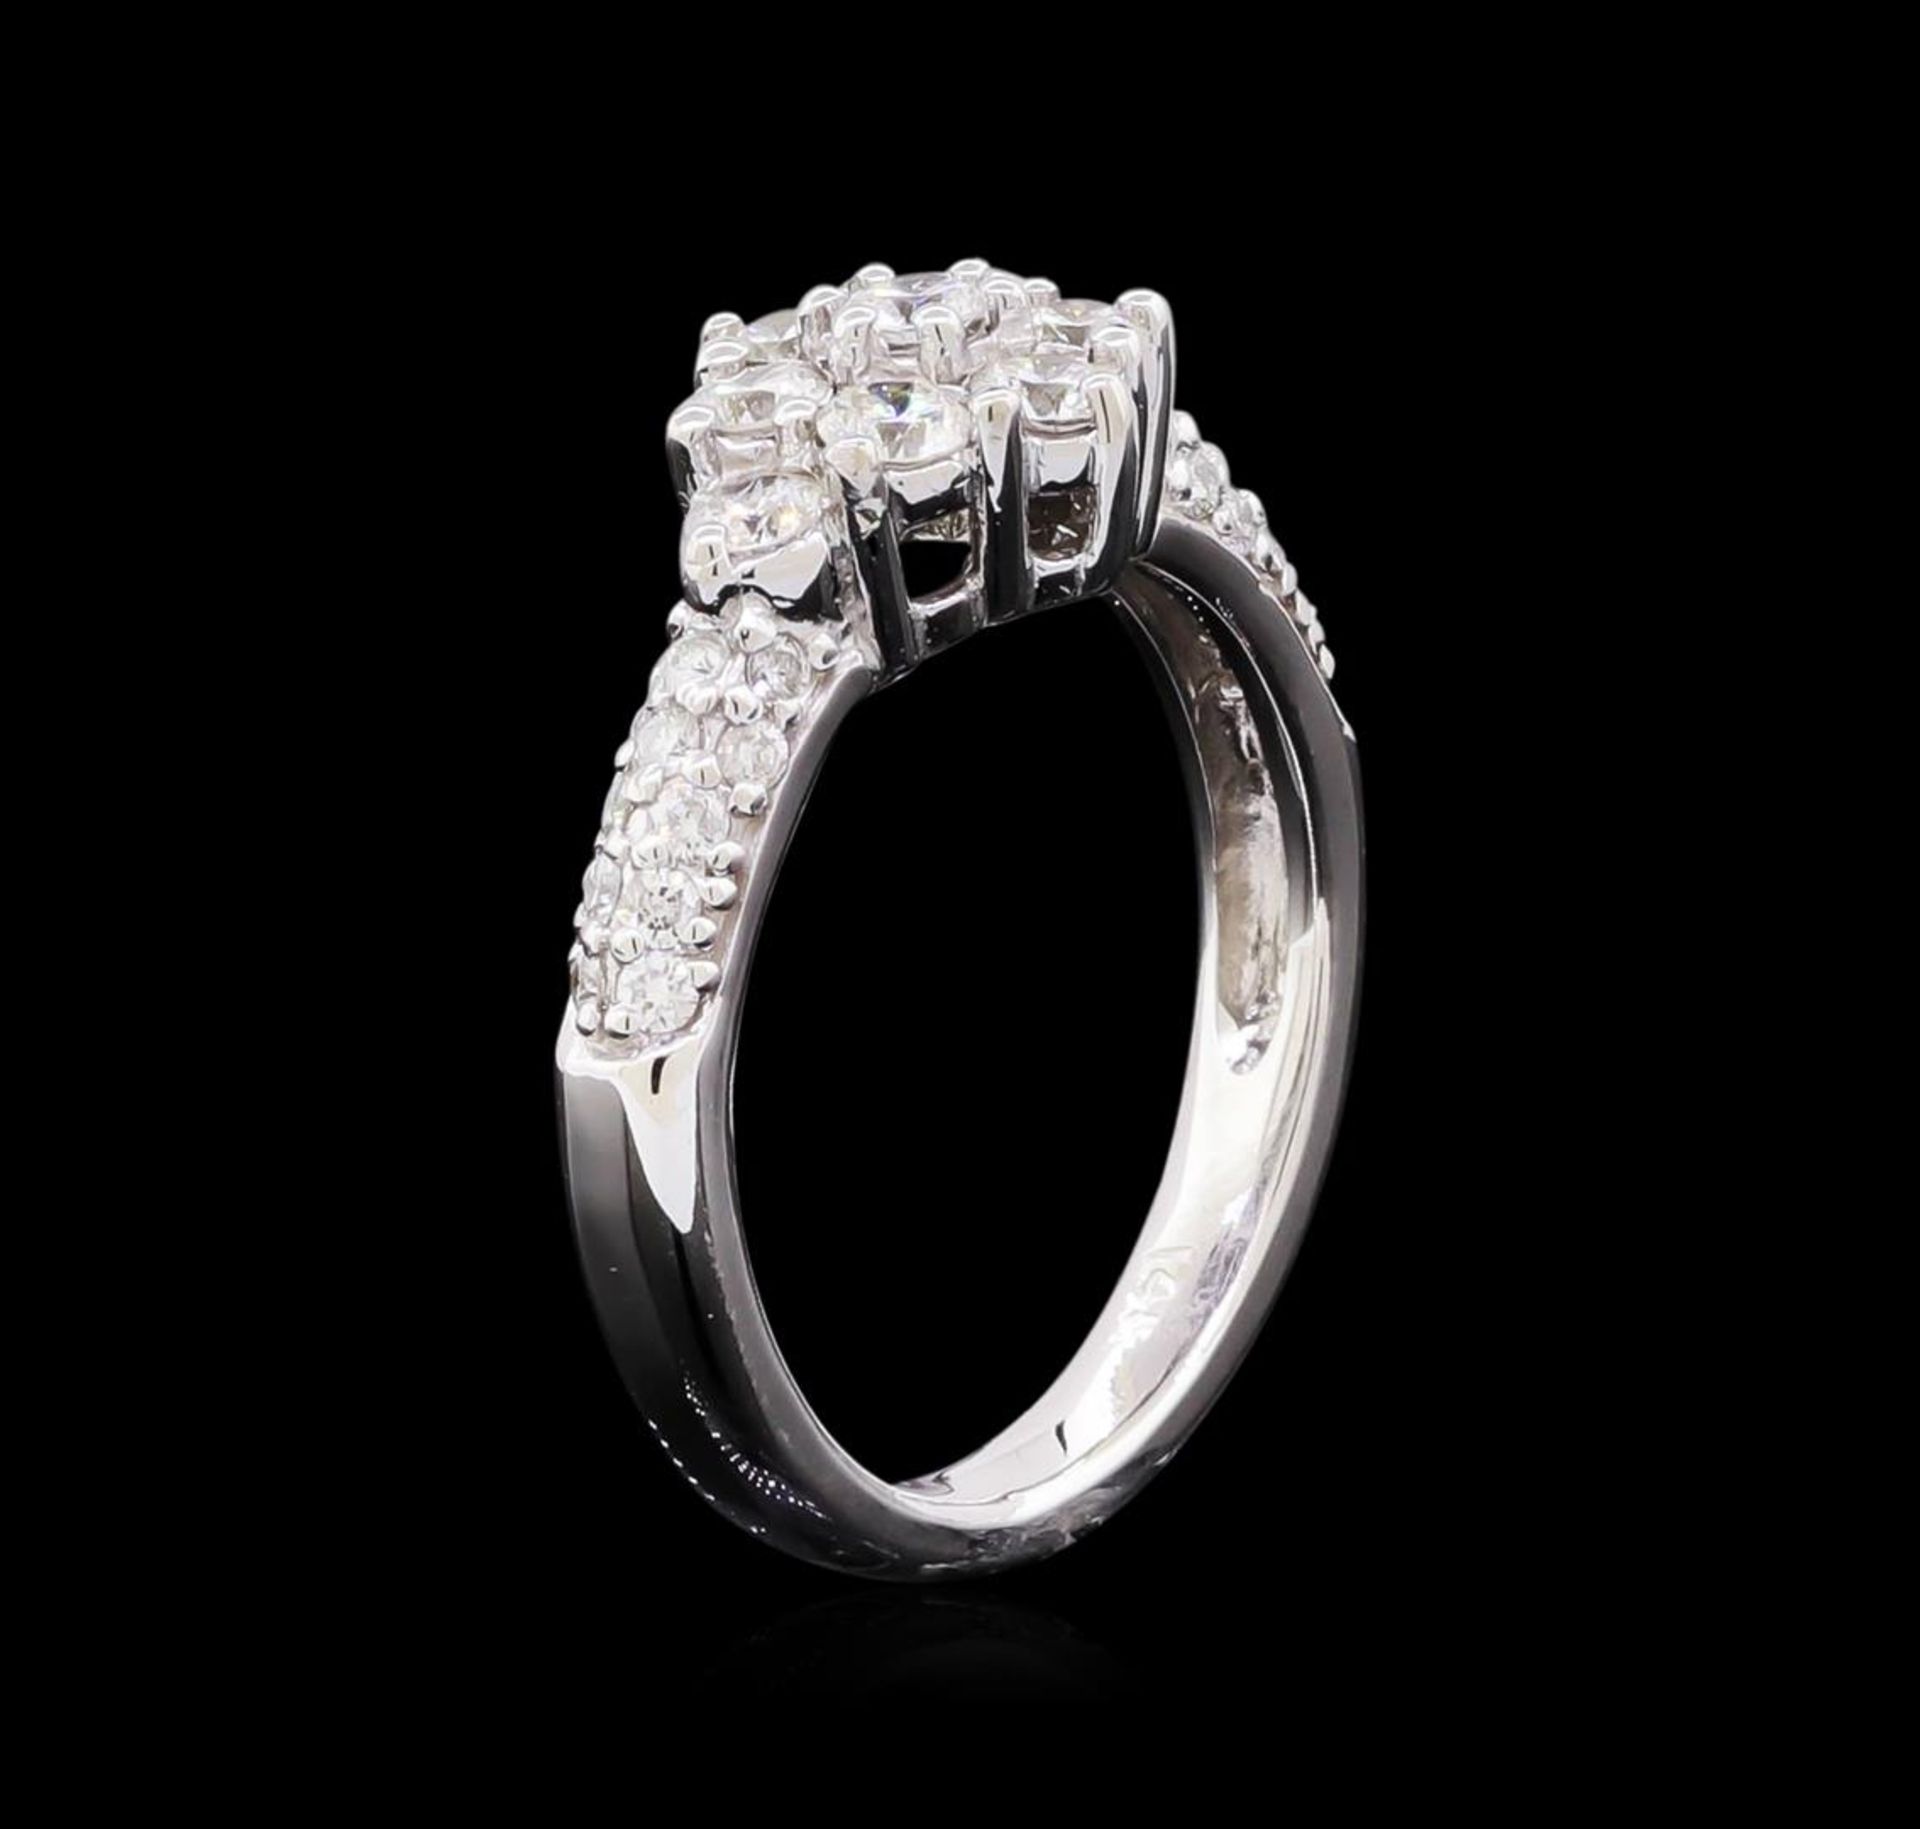 0.95ctw Diamond Ring - 14KT White Gold - Image 4 of 4